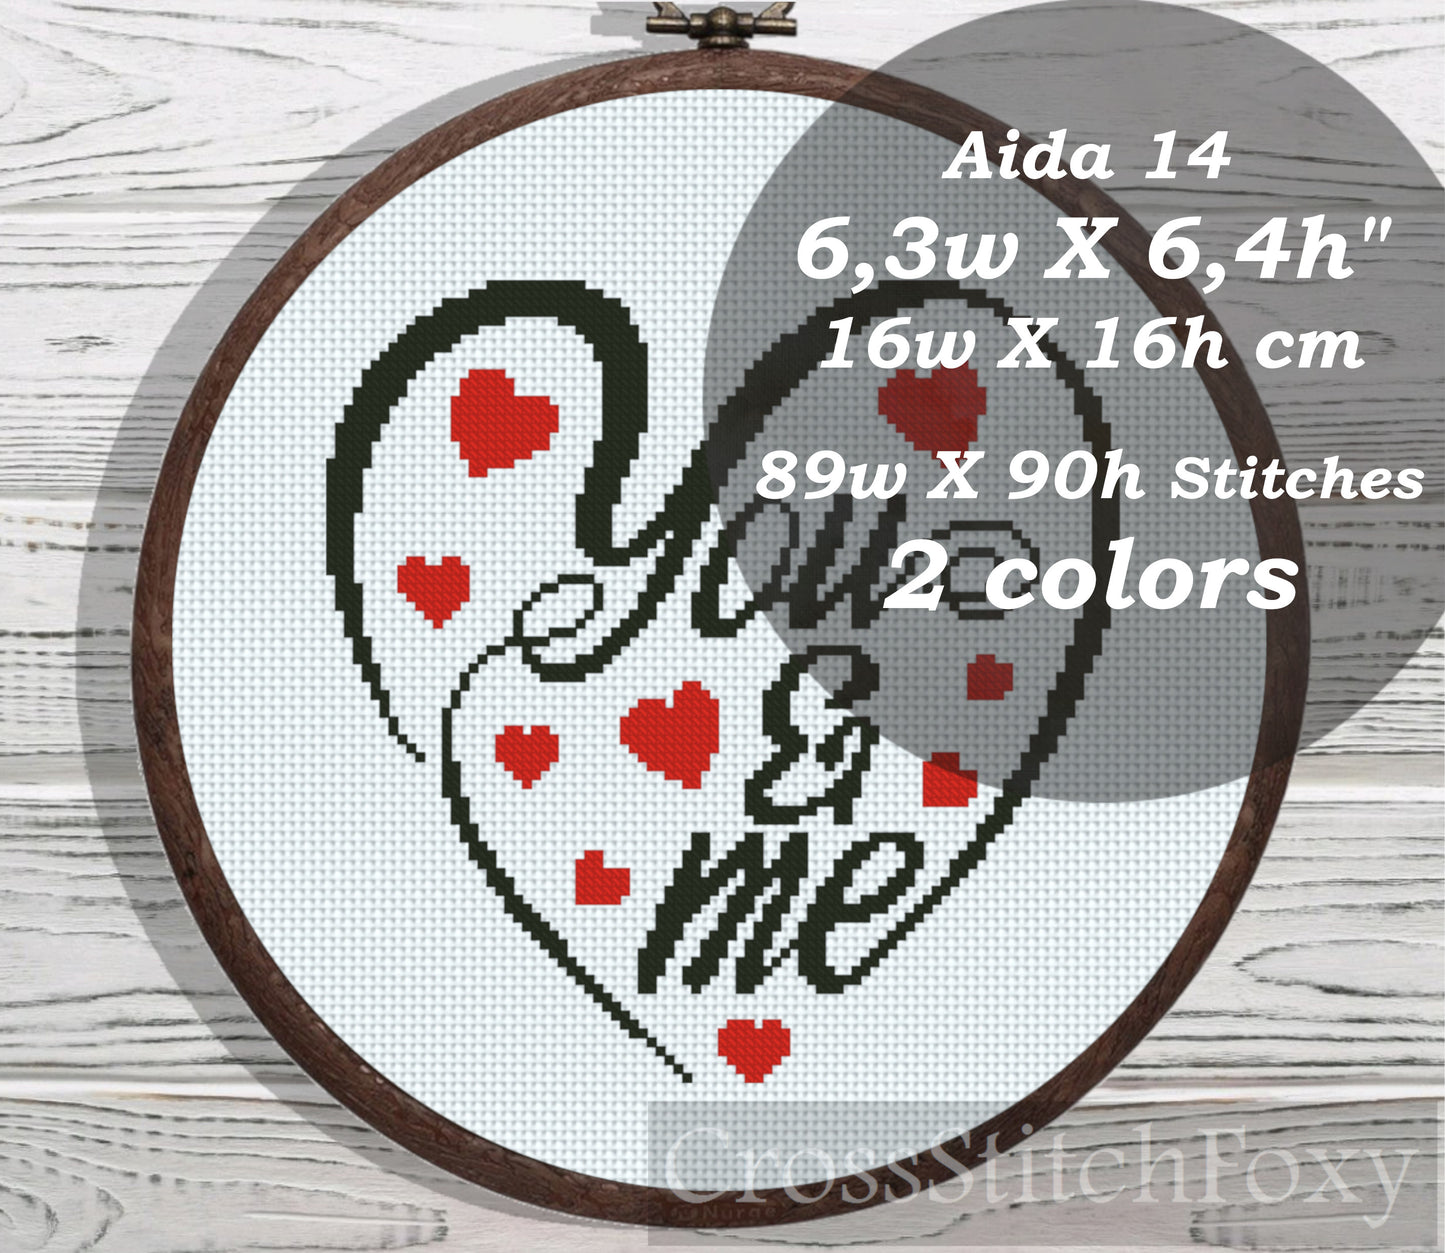 You & Me Heart cross stitch pattern